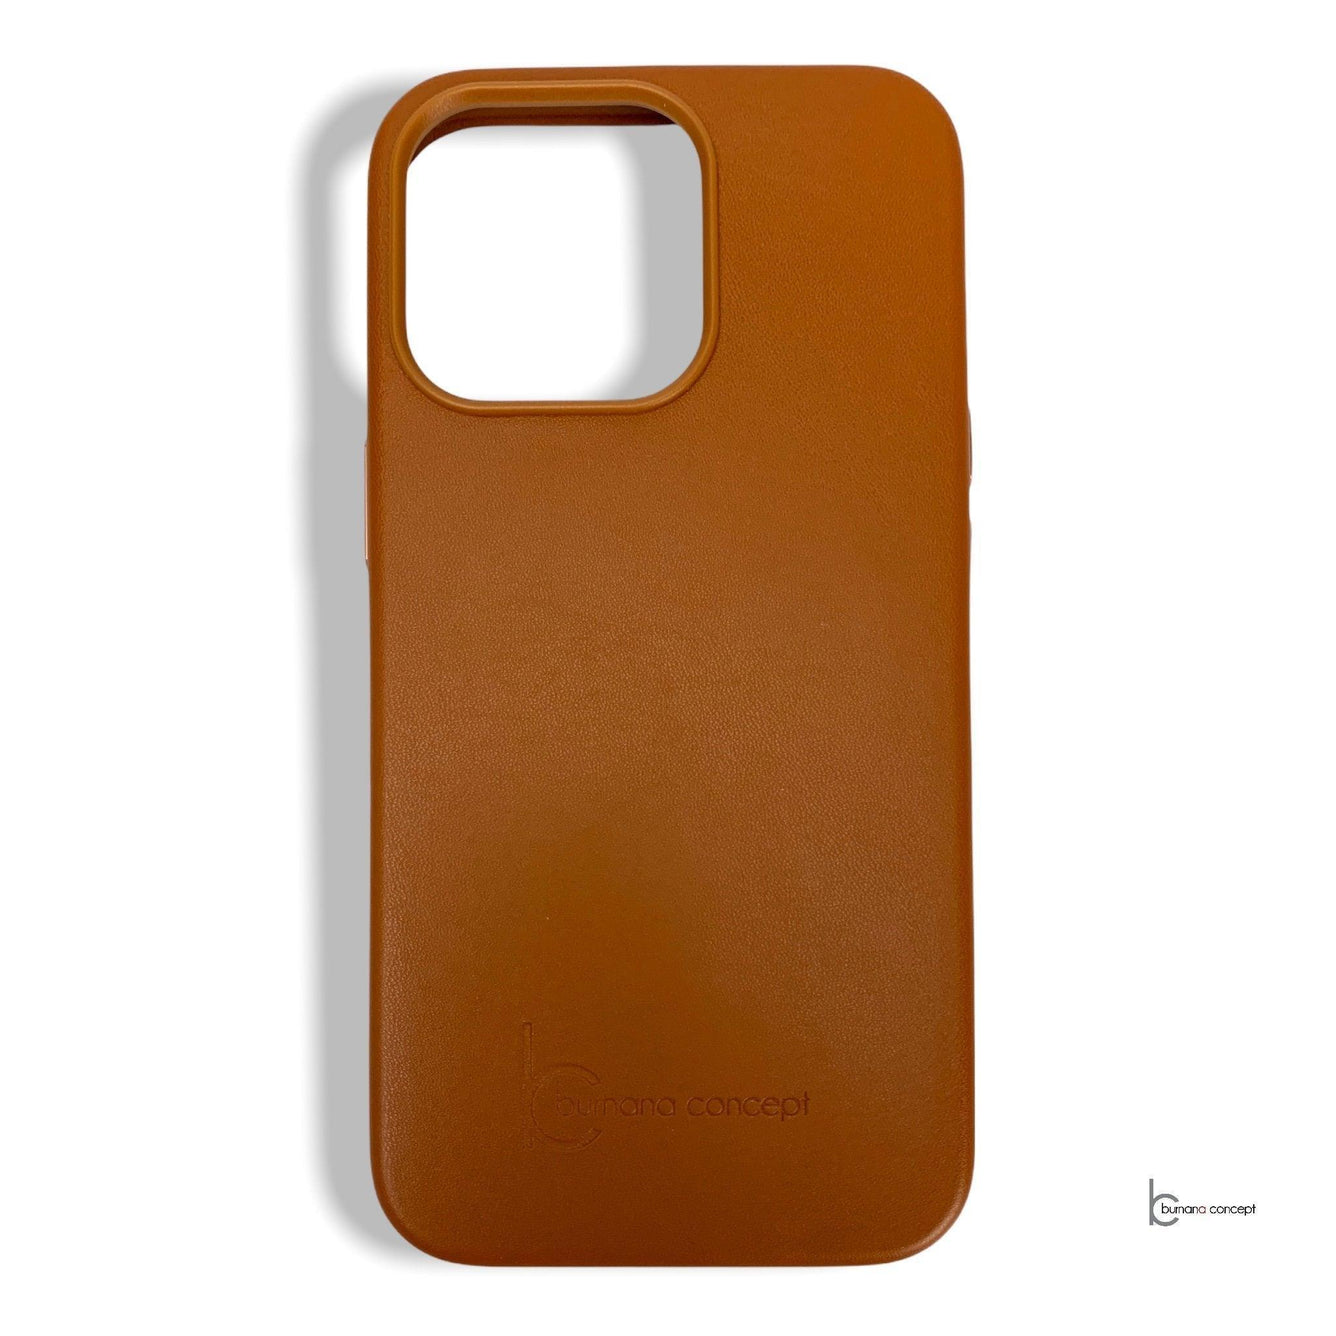 Burnana Concept Leather Case For iPhone 13 Pro - Burnana Concept 